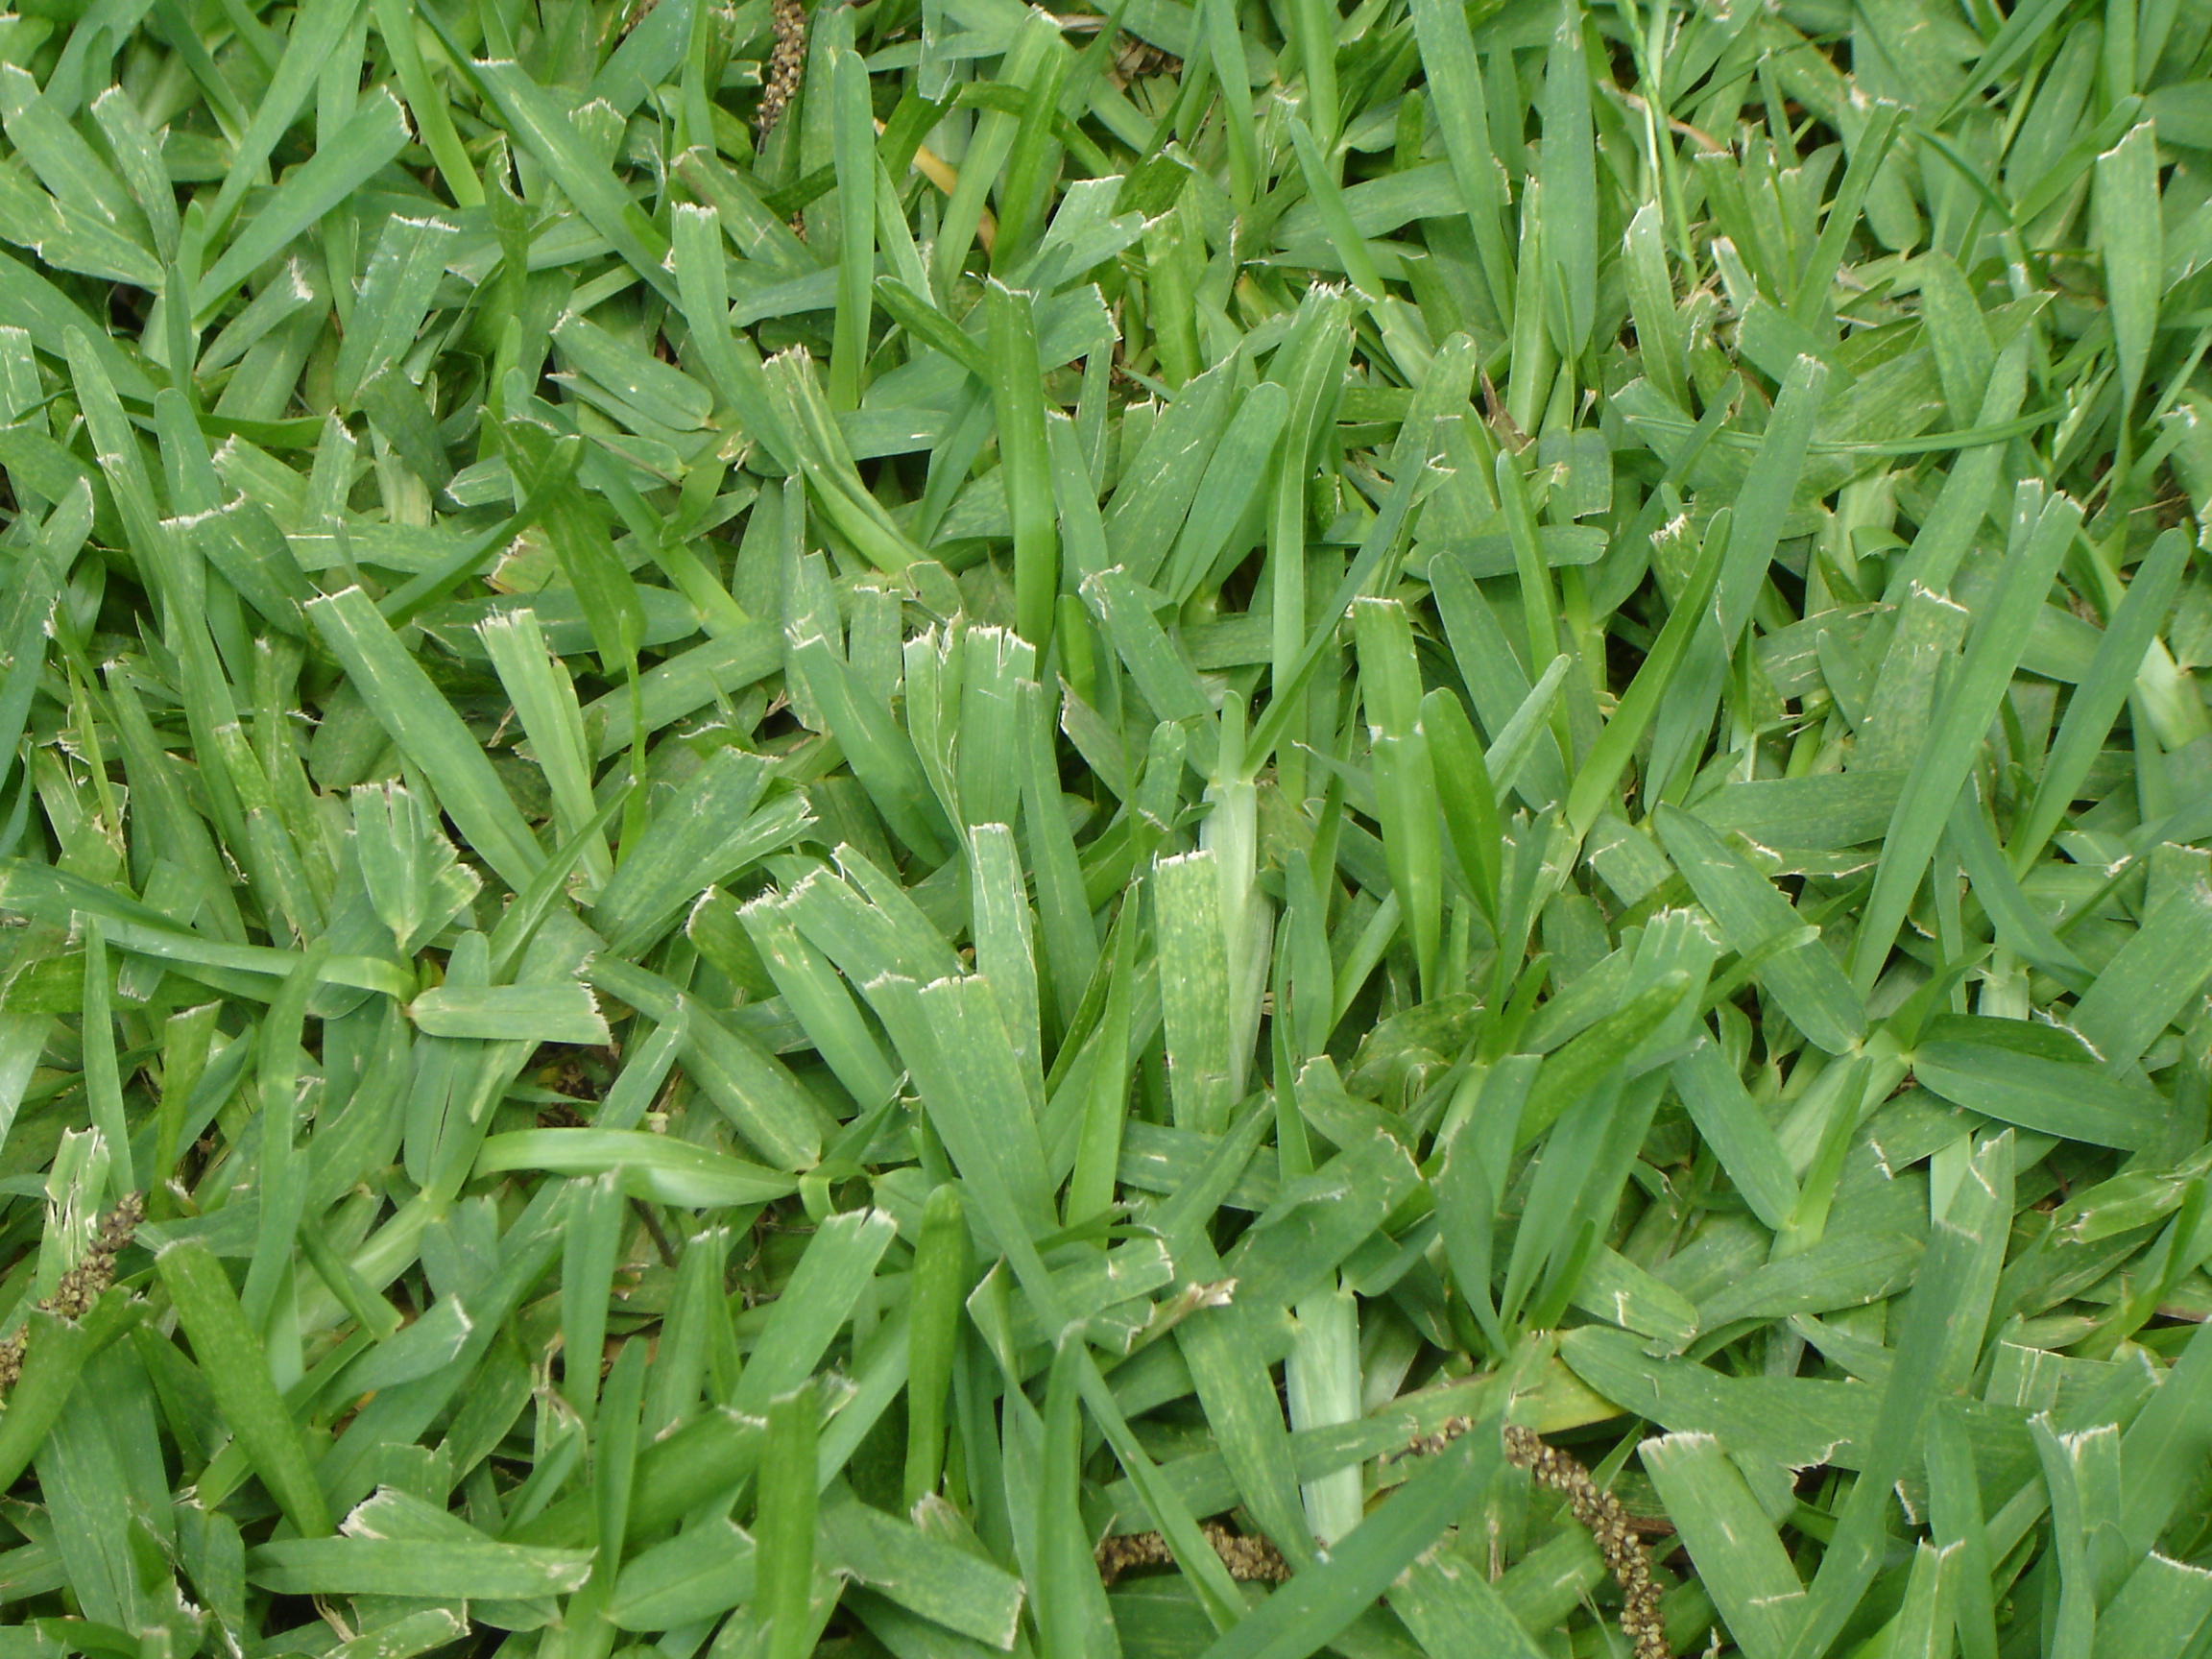 Types of Grass